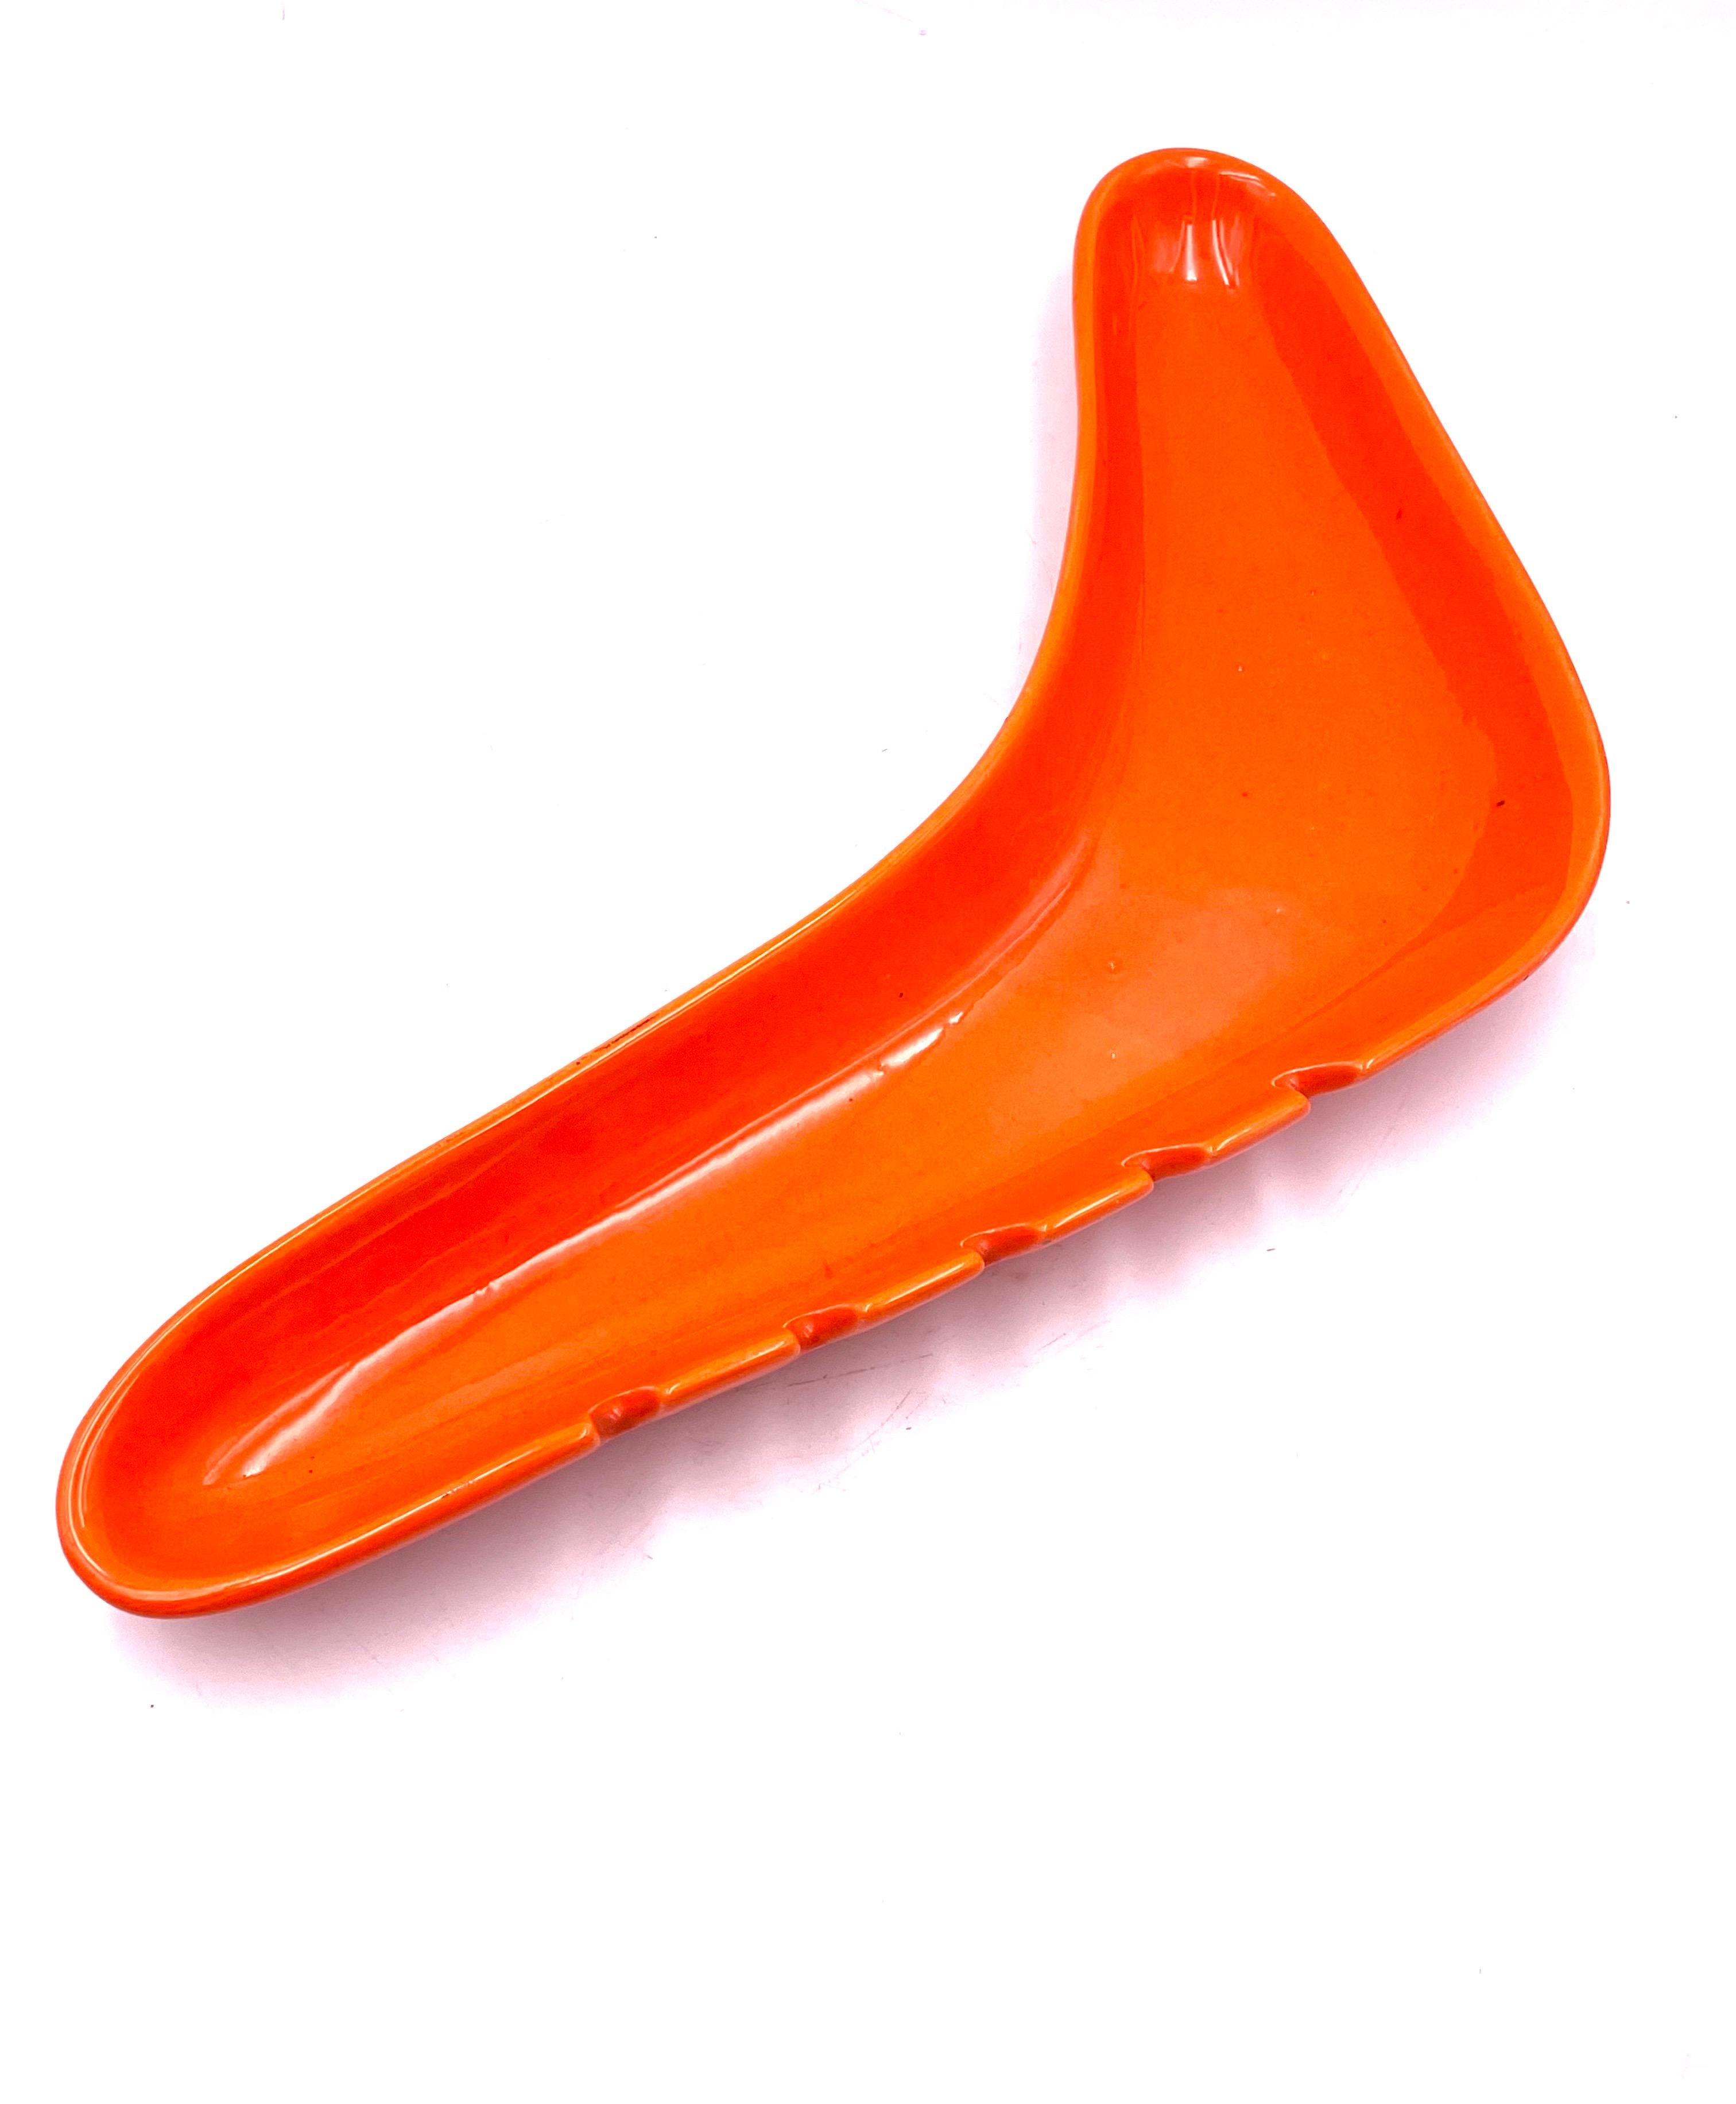 Sticking large klassik atomic age, boomerang ashtray in beautiful orange perfect condition no chips or cracks.